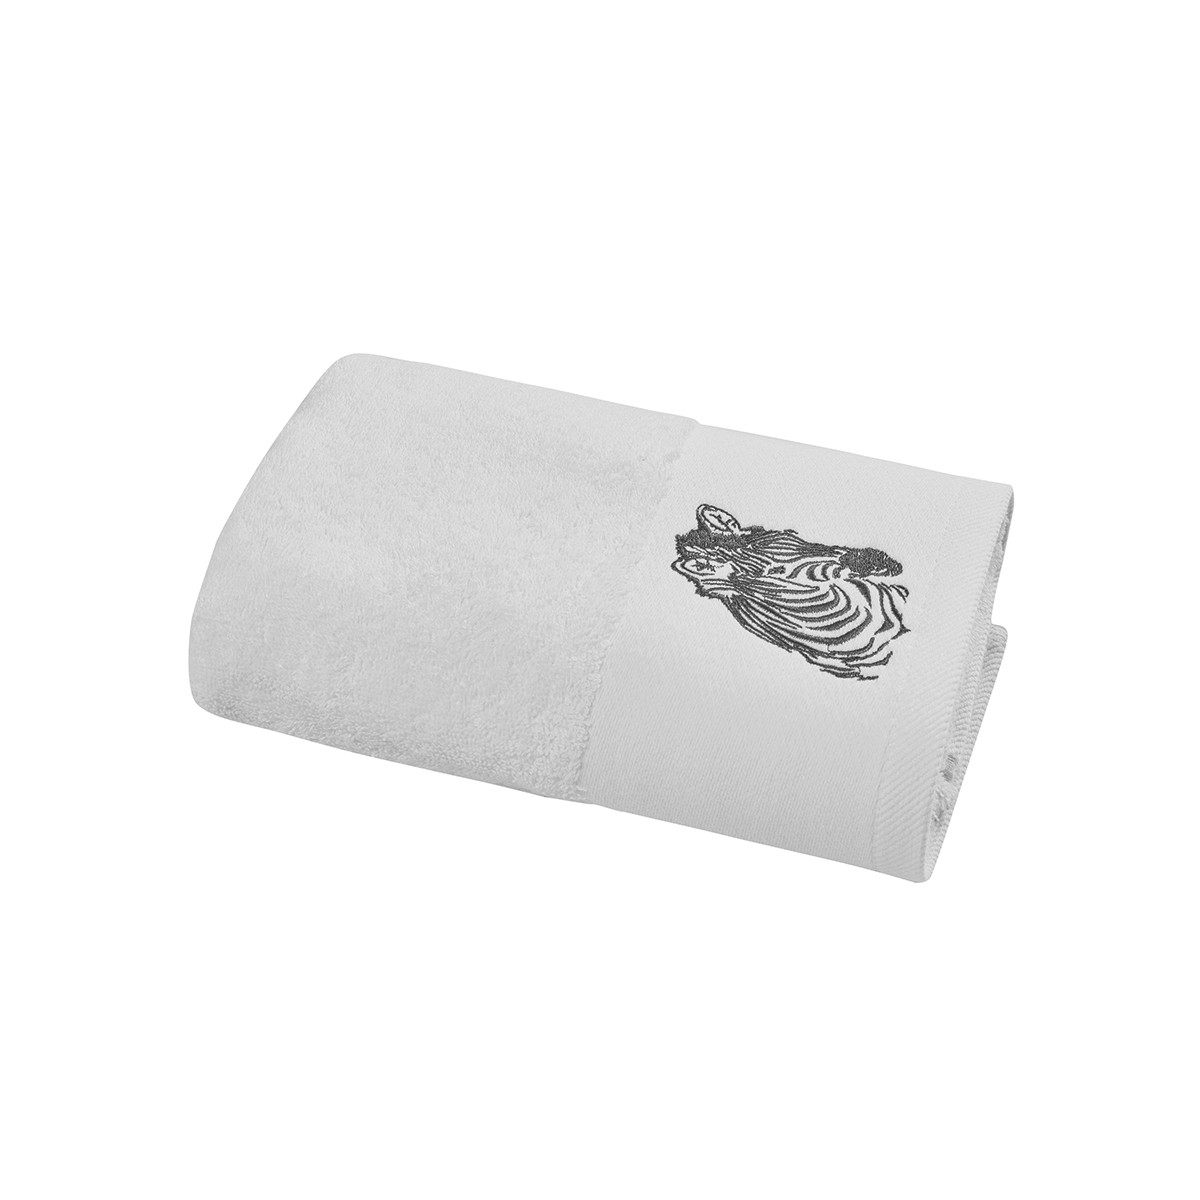 drap de bain en coton blanc 70x140 cm